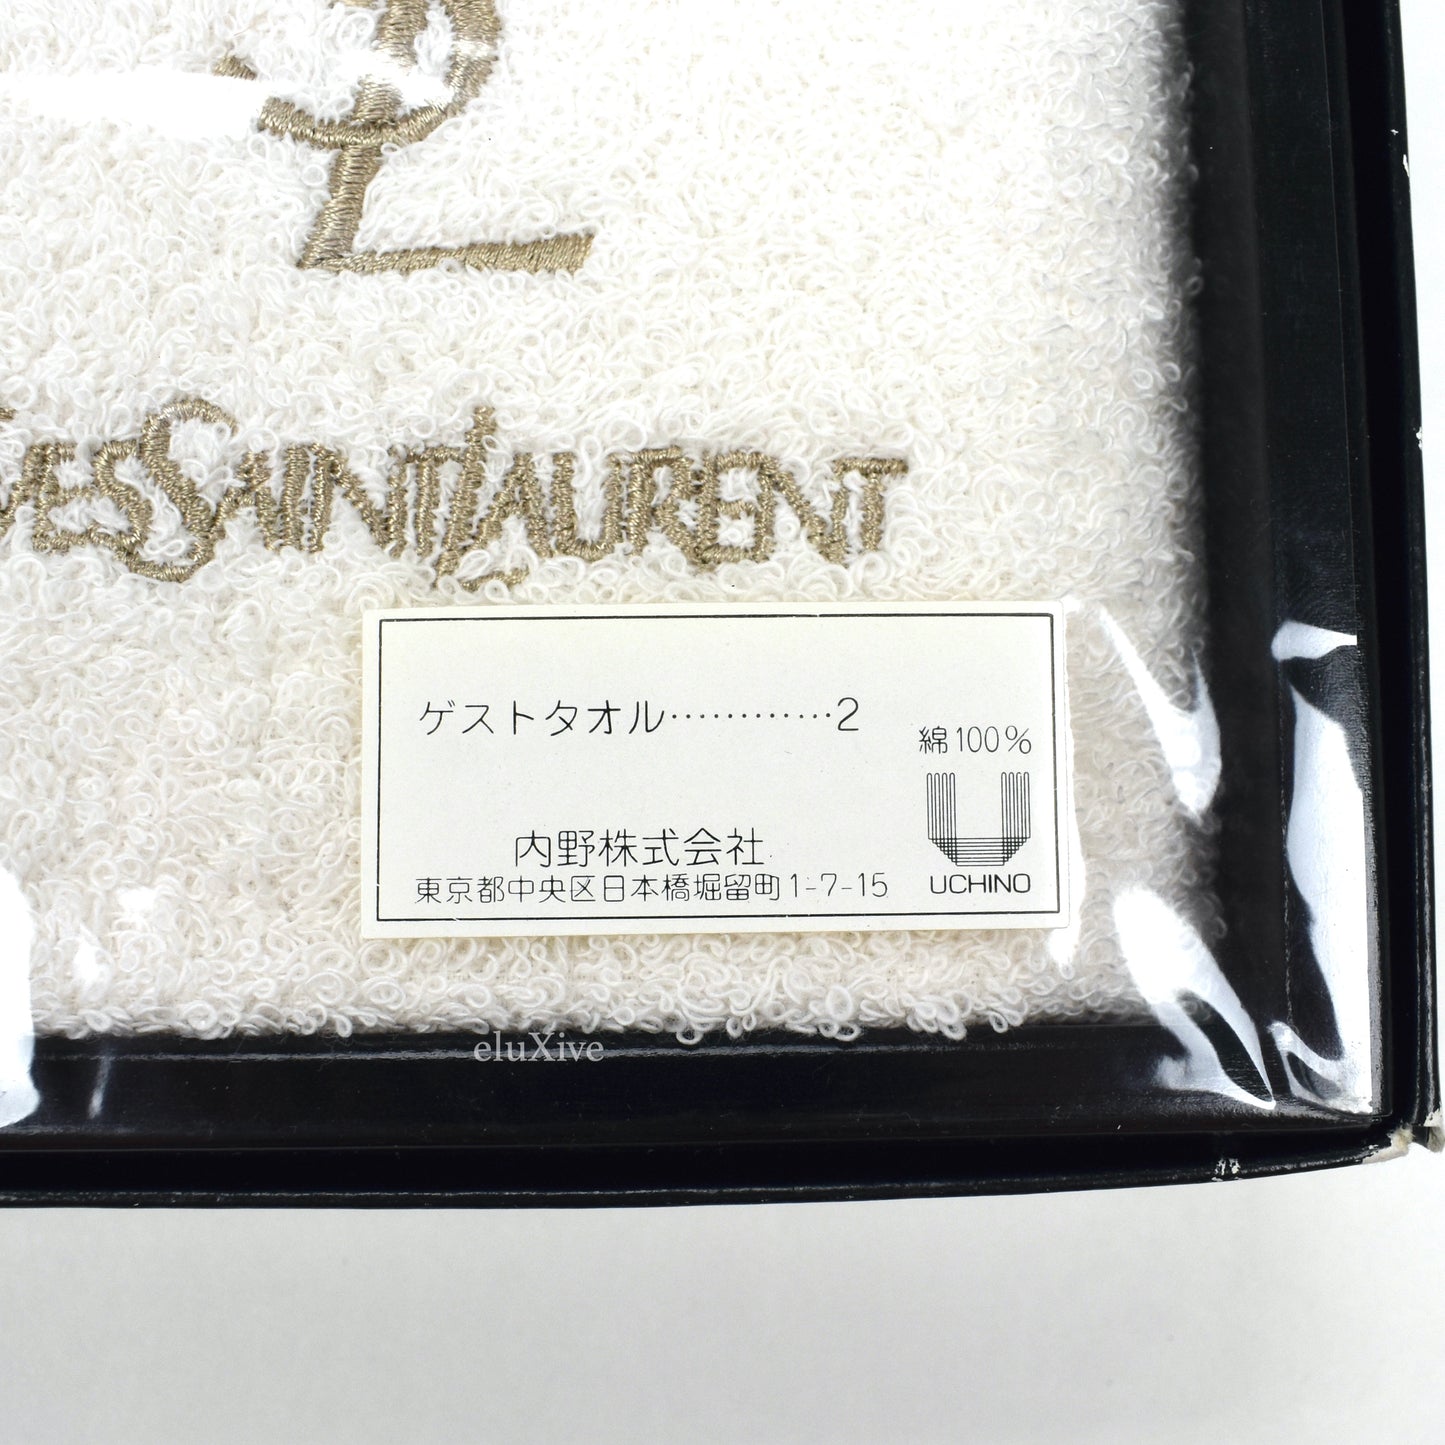 Yves Saint Laurent - Ivory Set of 2 Logo Hand Towels (Medium)